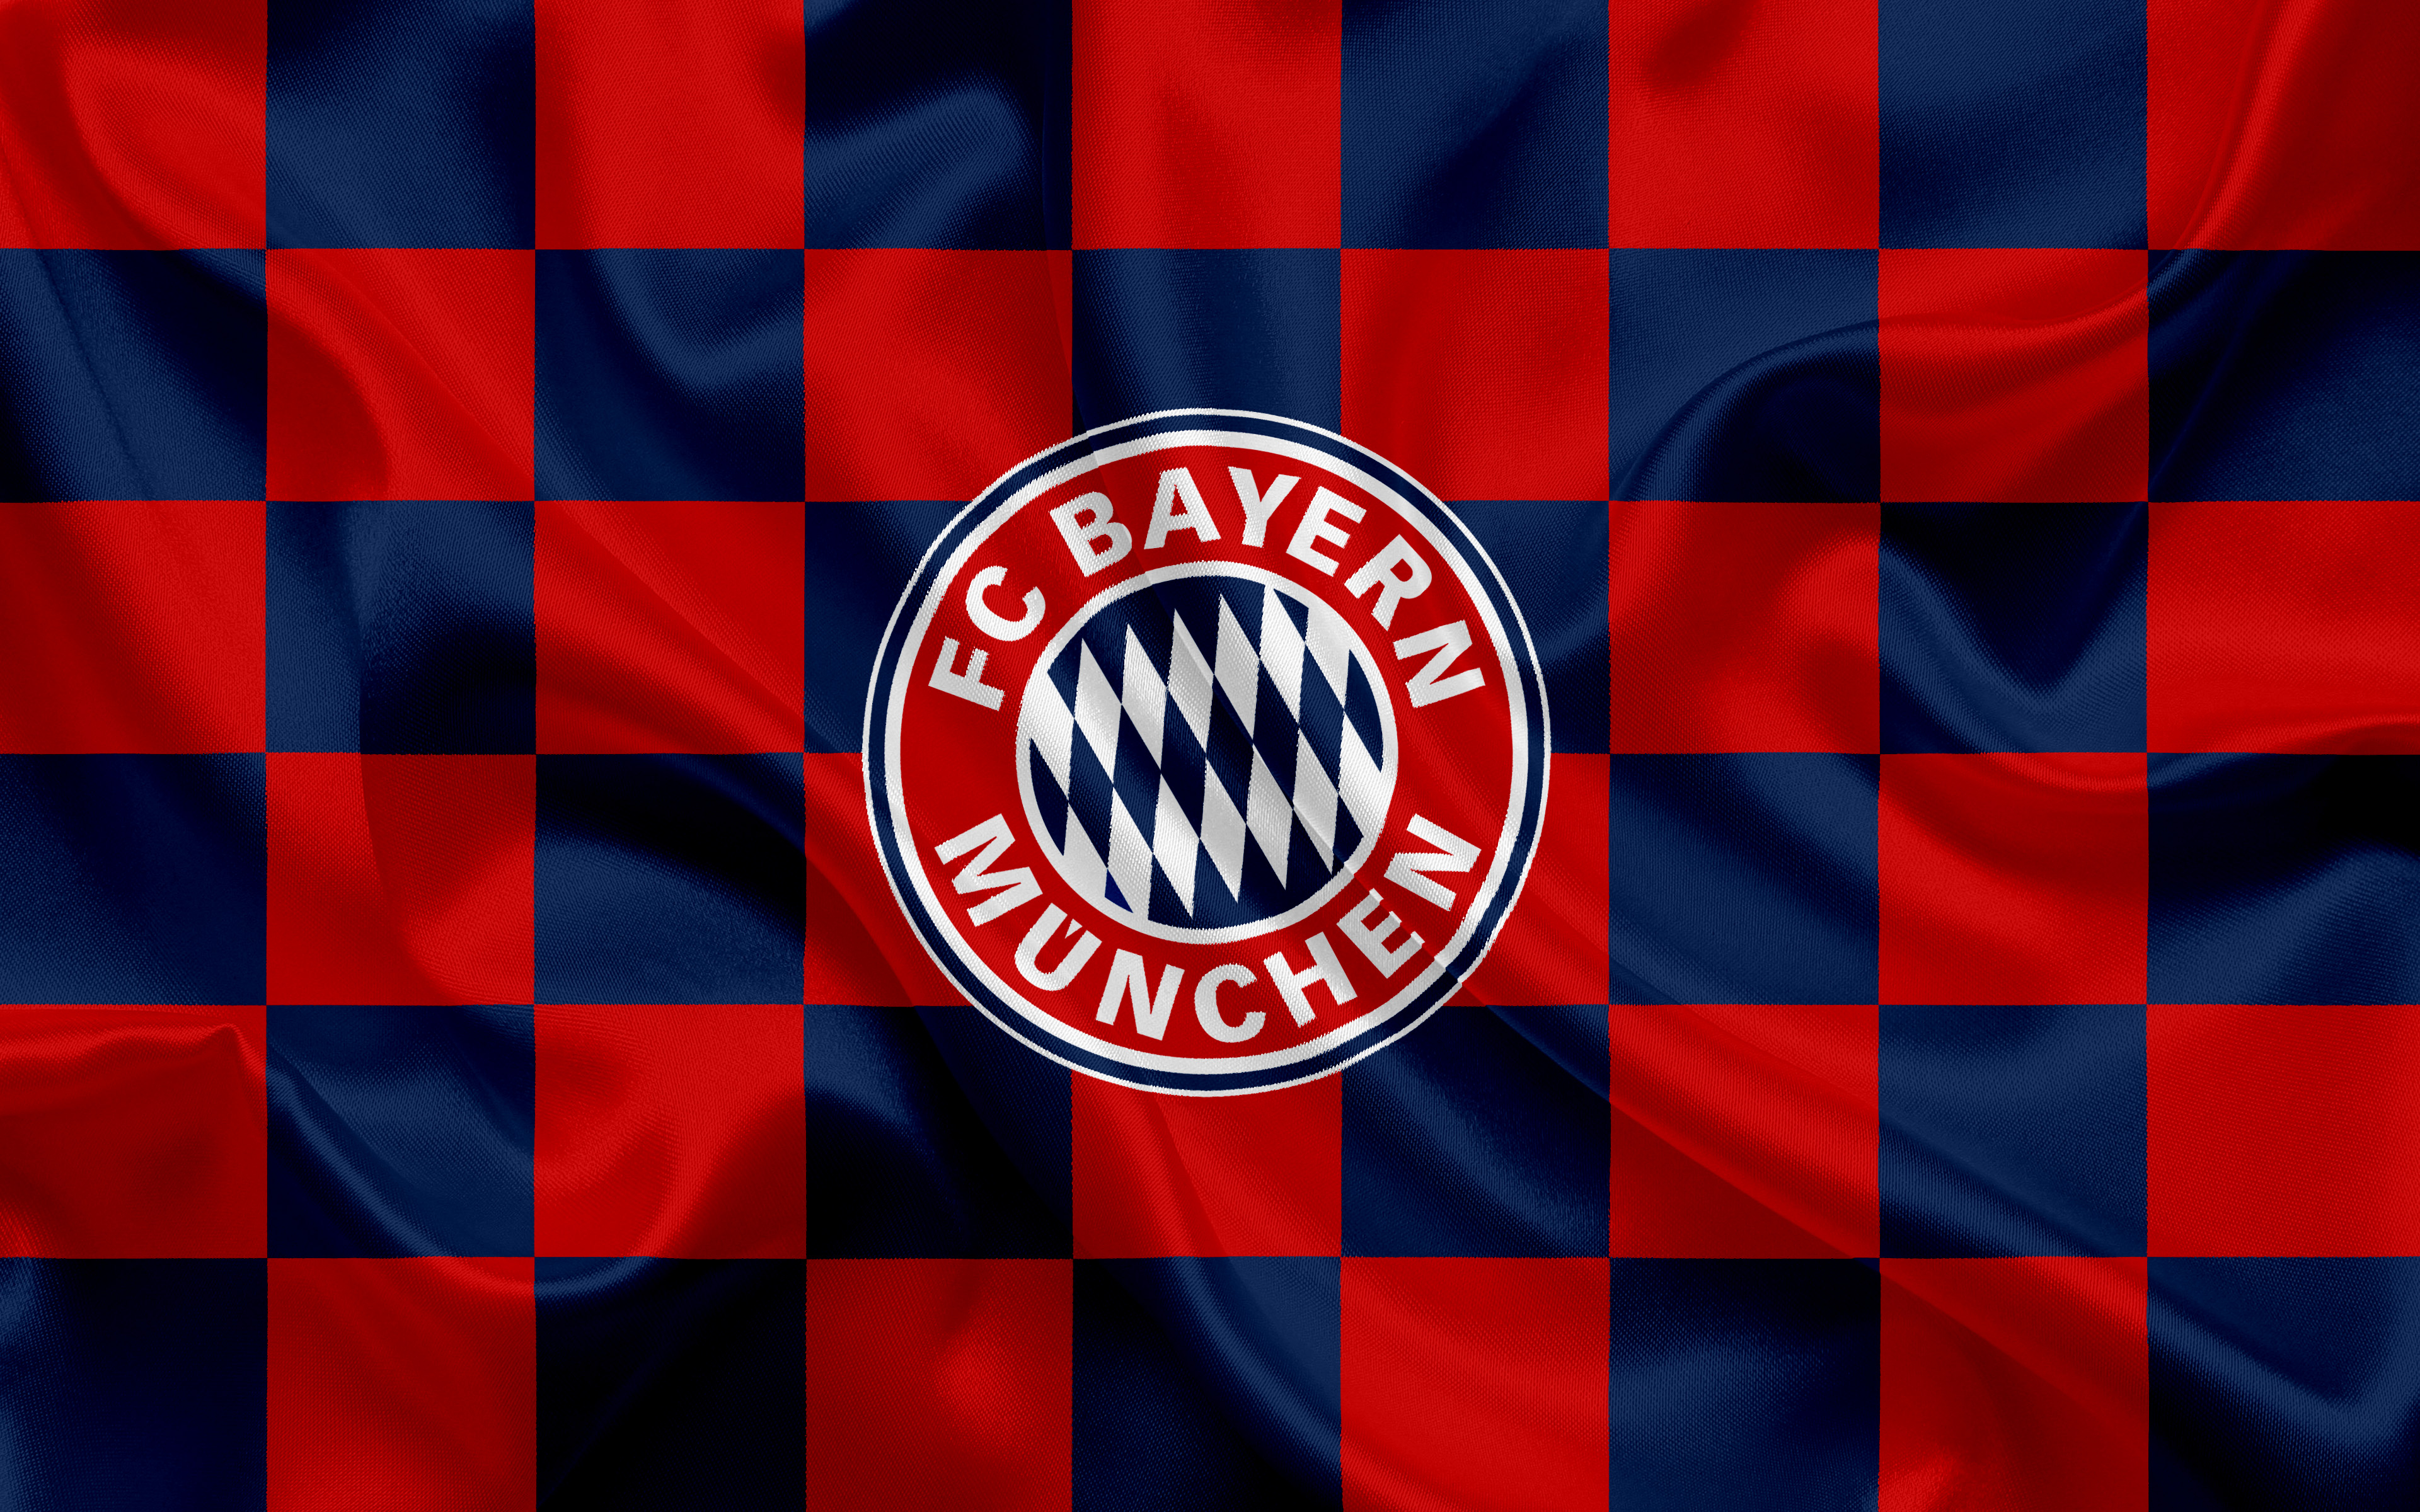 fc bayern munich, logo, emblem, sports, soccer